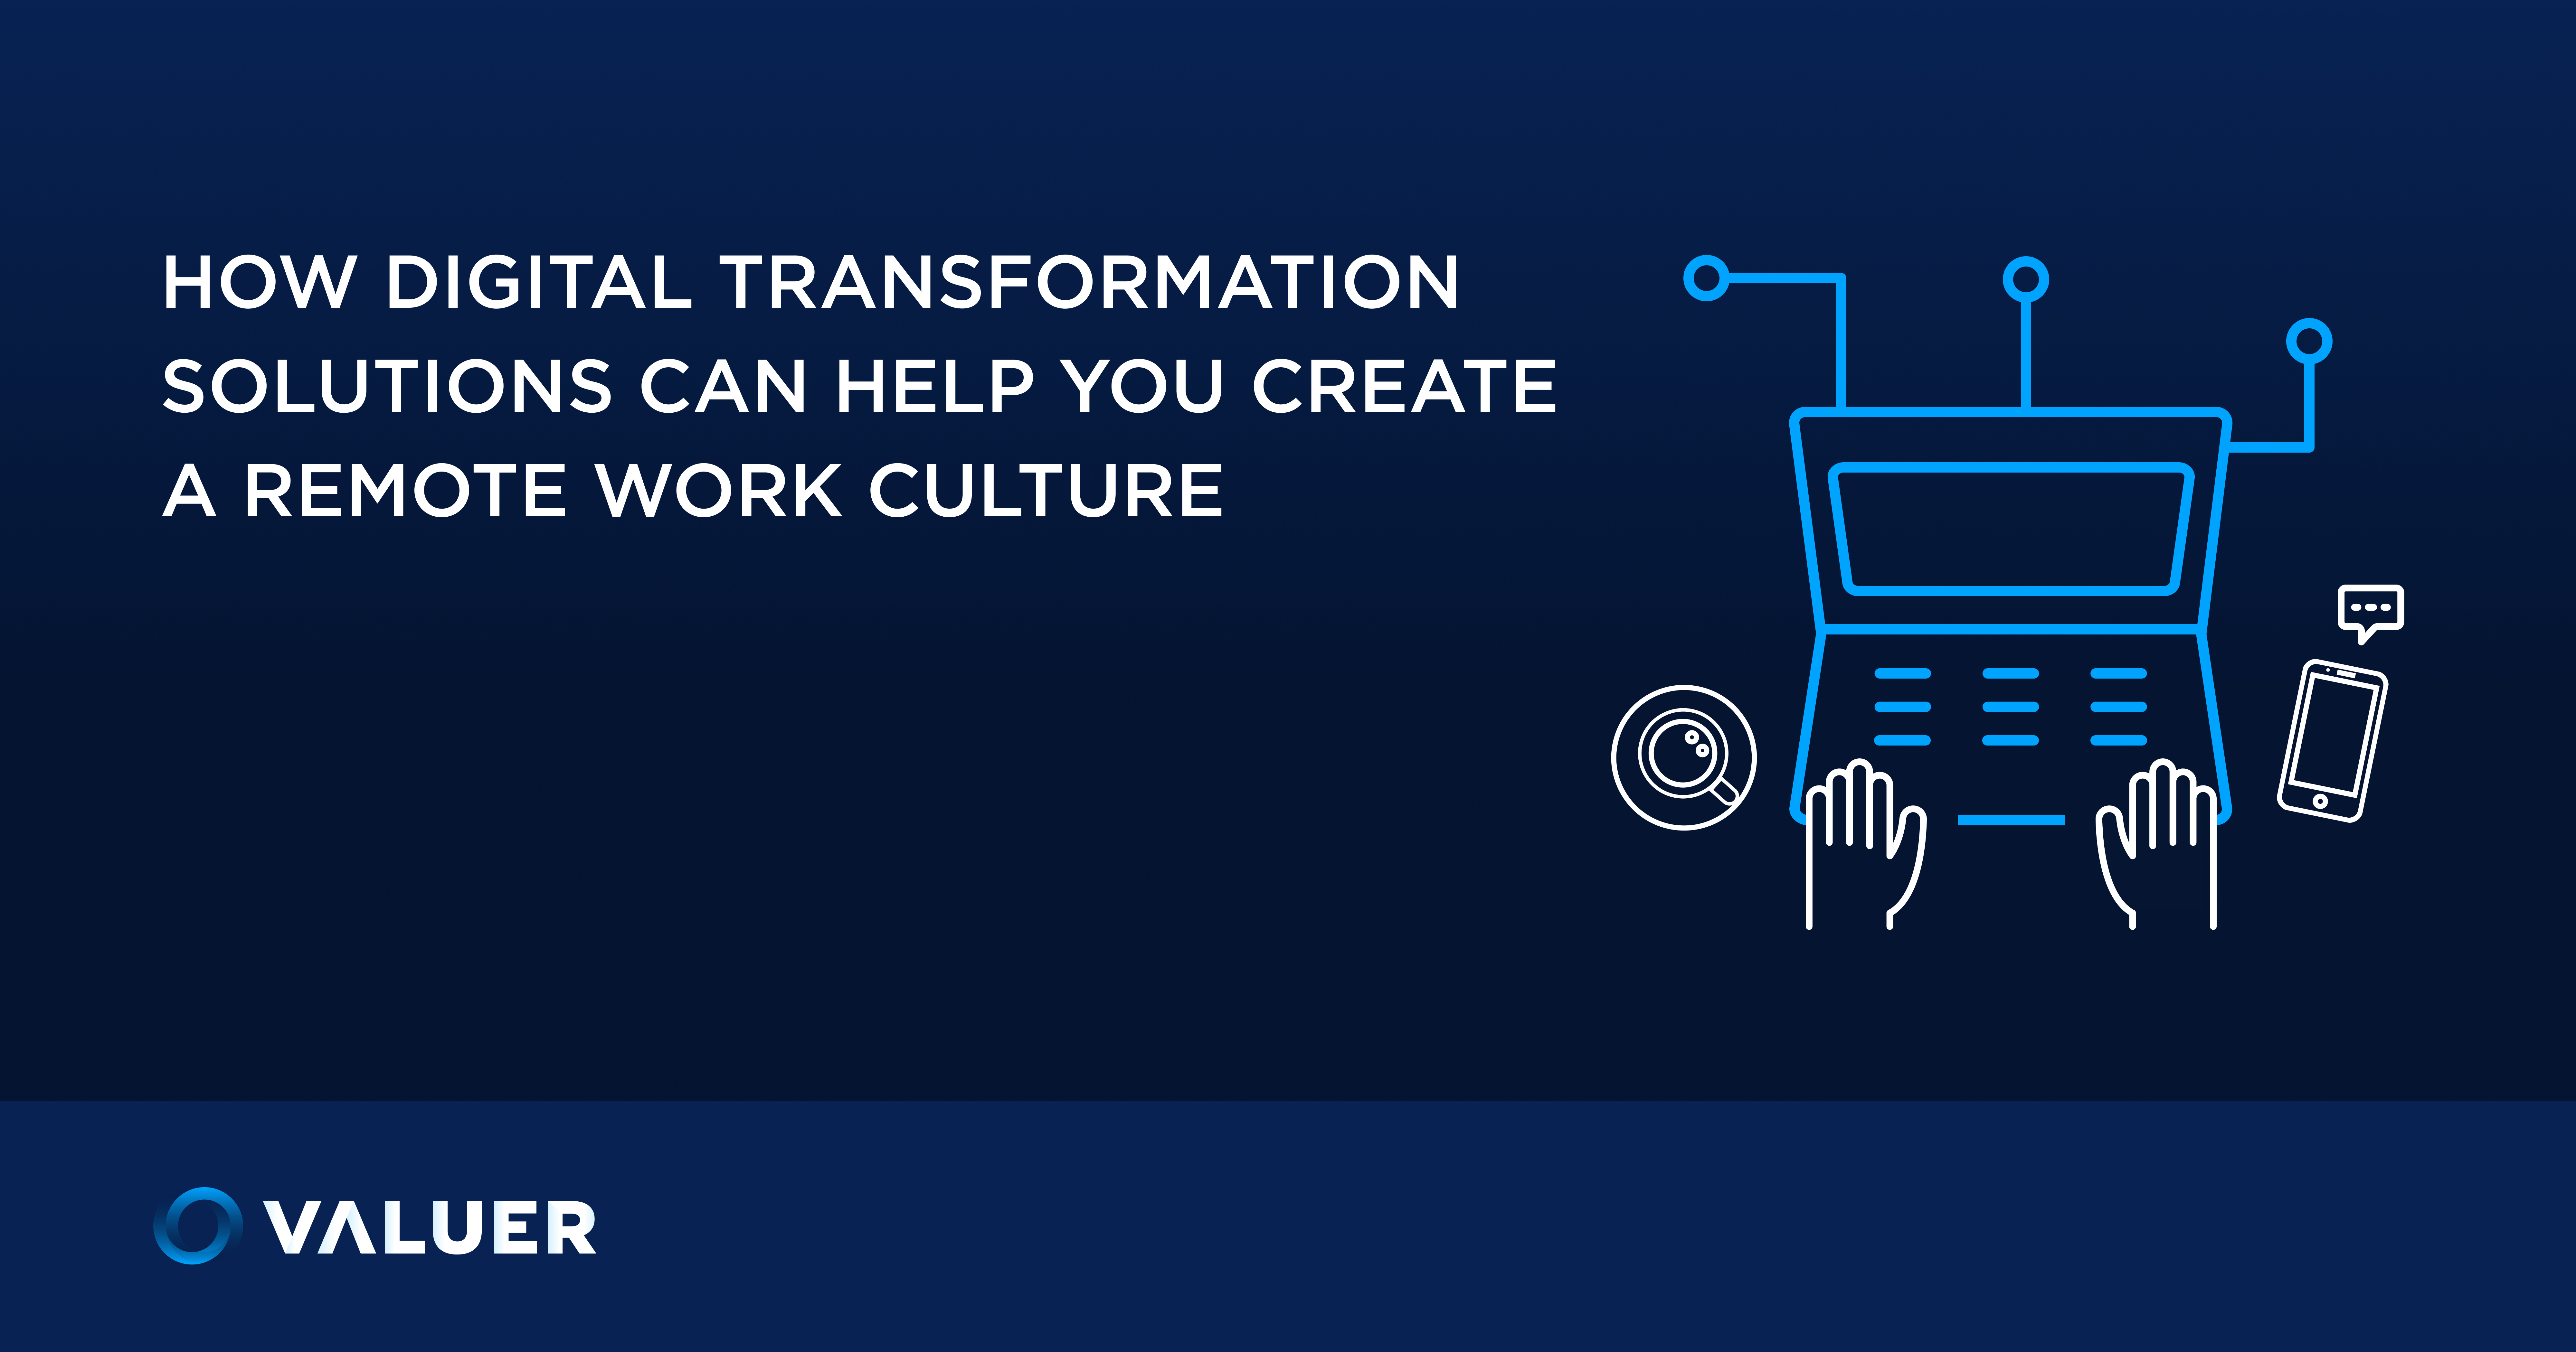 Remote Work Culture via Digital Transformation